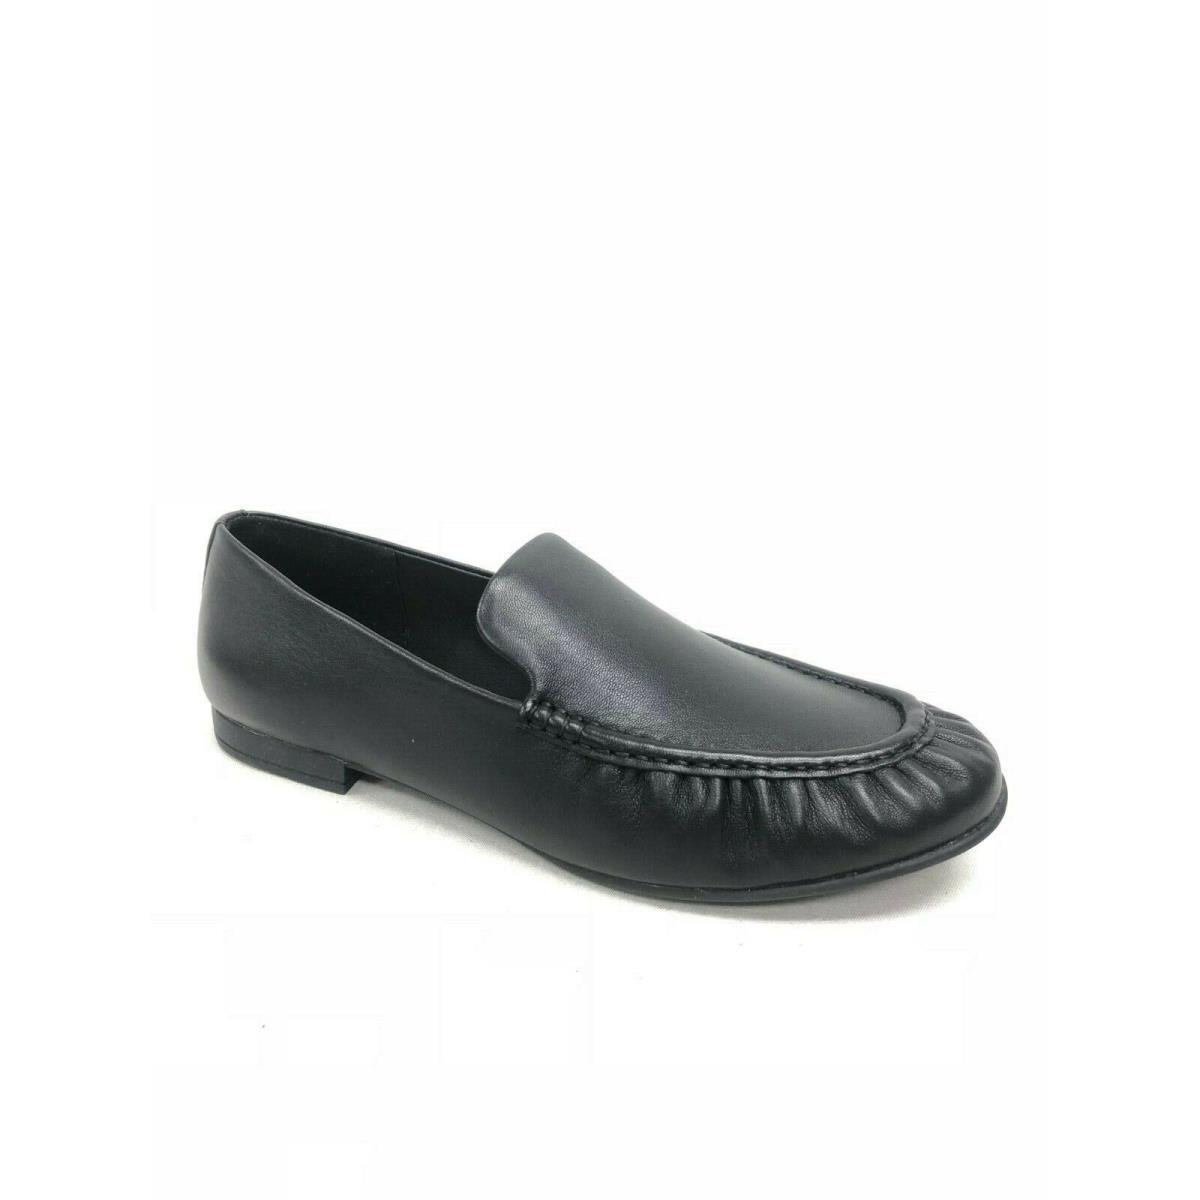 Ugg Australia Women`s Vivian Black Leather Loafers Shoes 1104714 .5 Heel